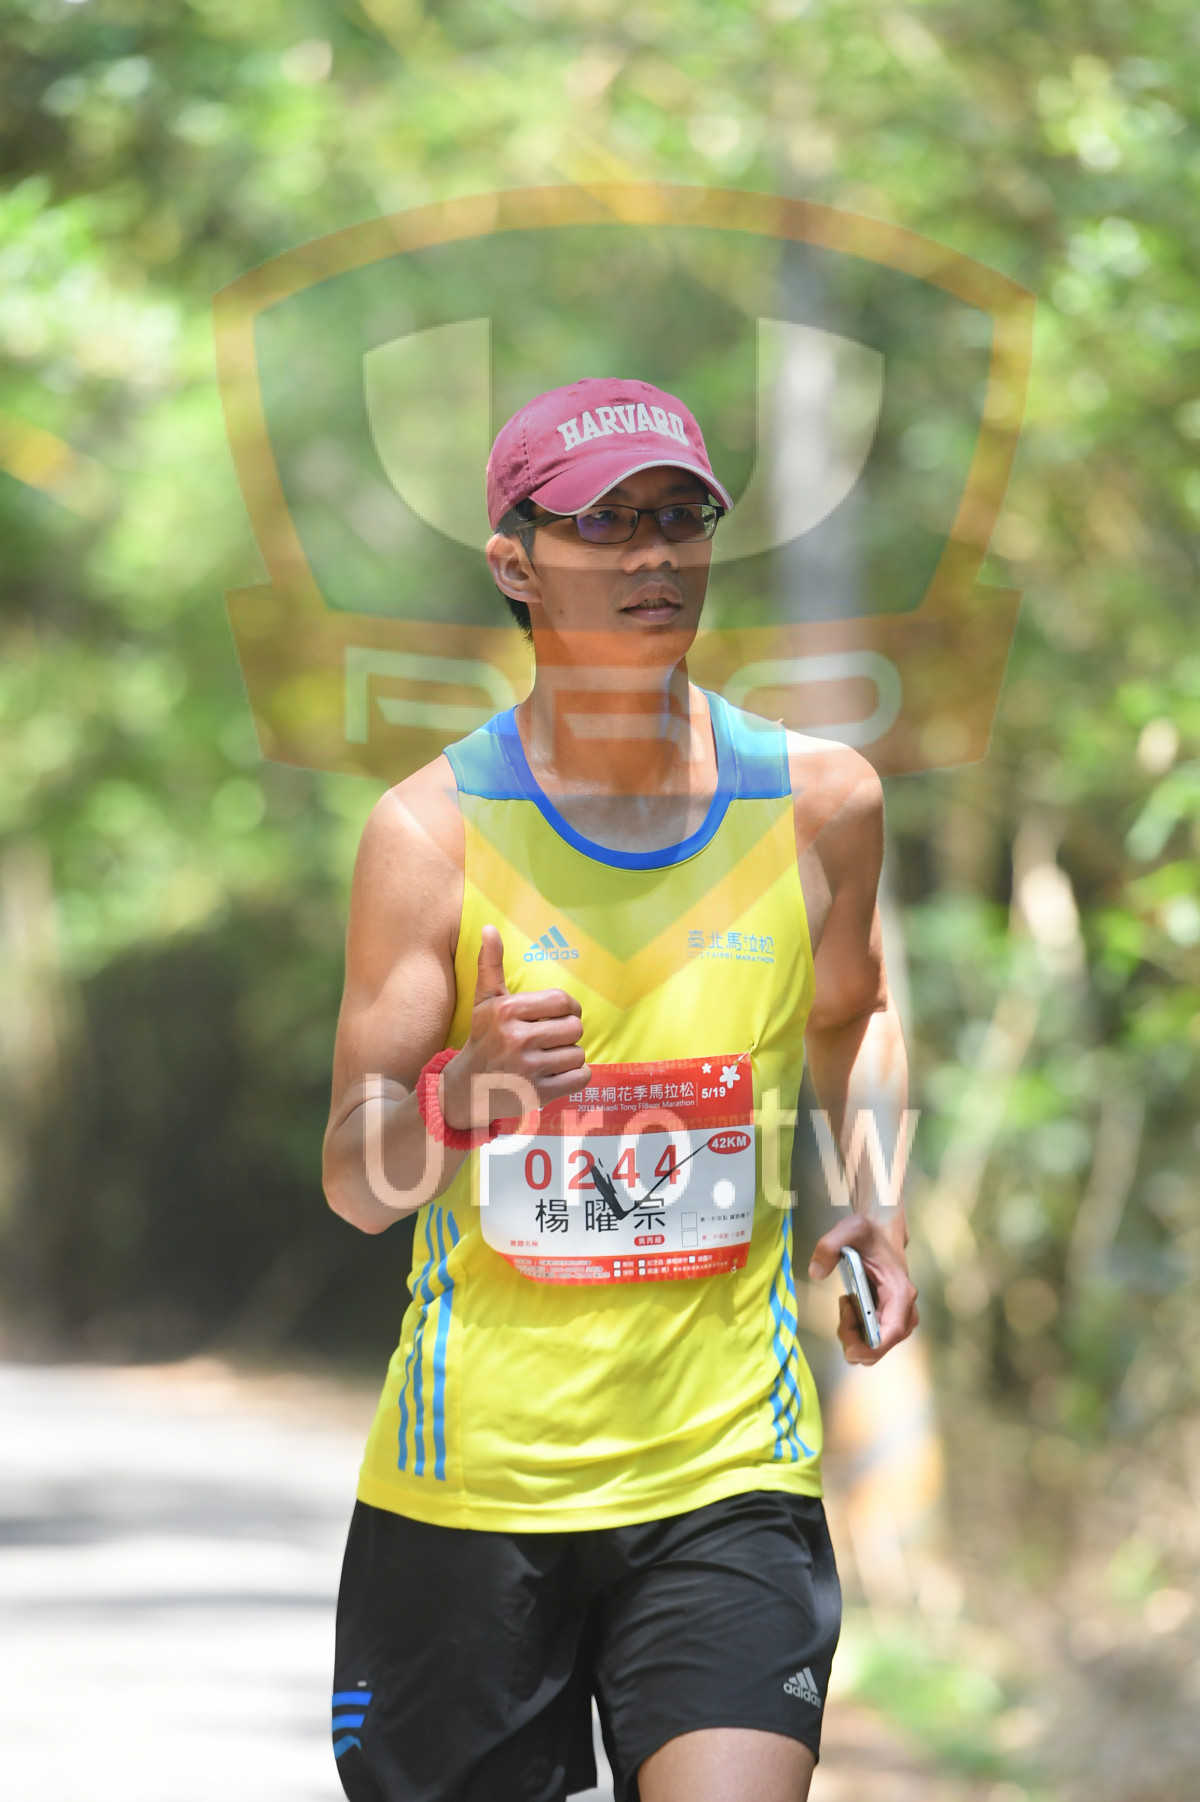 adidaS,,2013 Miaali lang FiSaver Marathon,5,19,0244,42KM|綠色隧道2|中年人